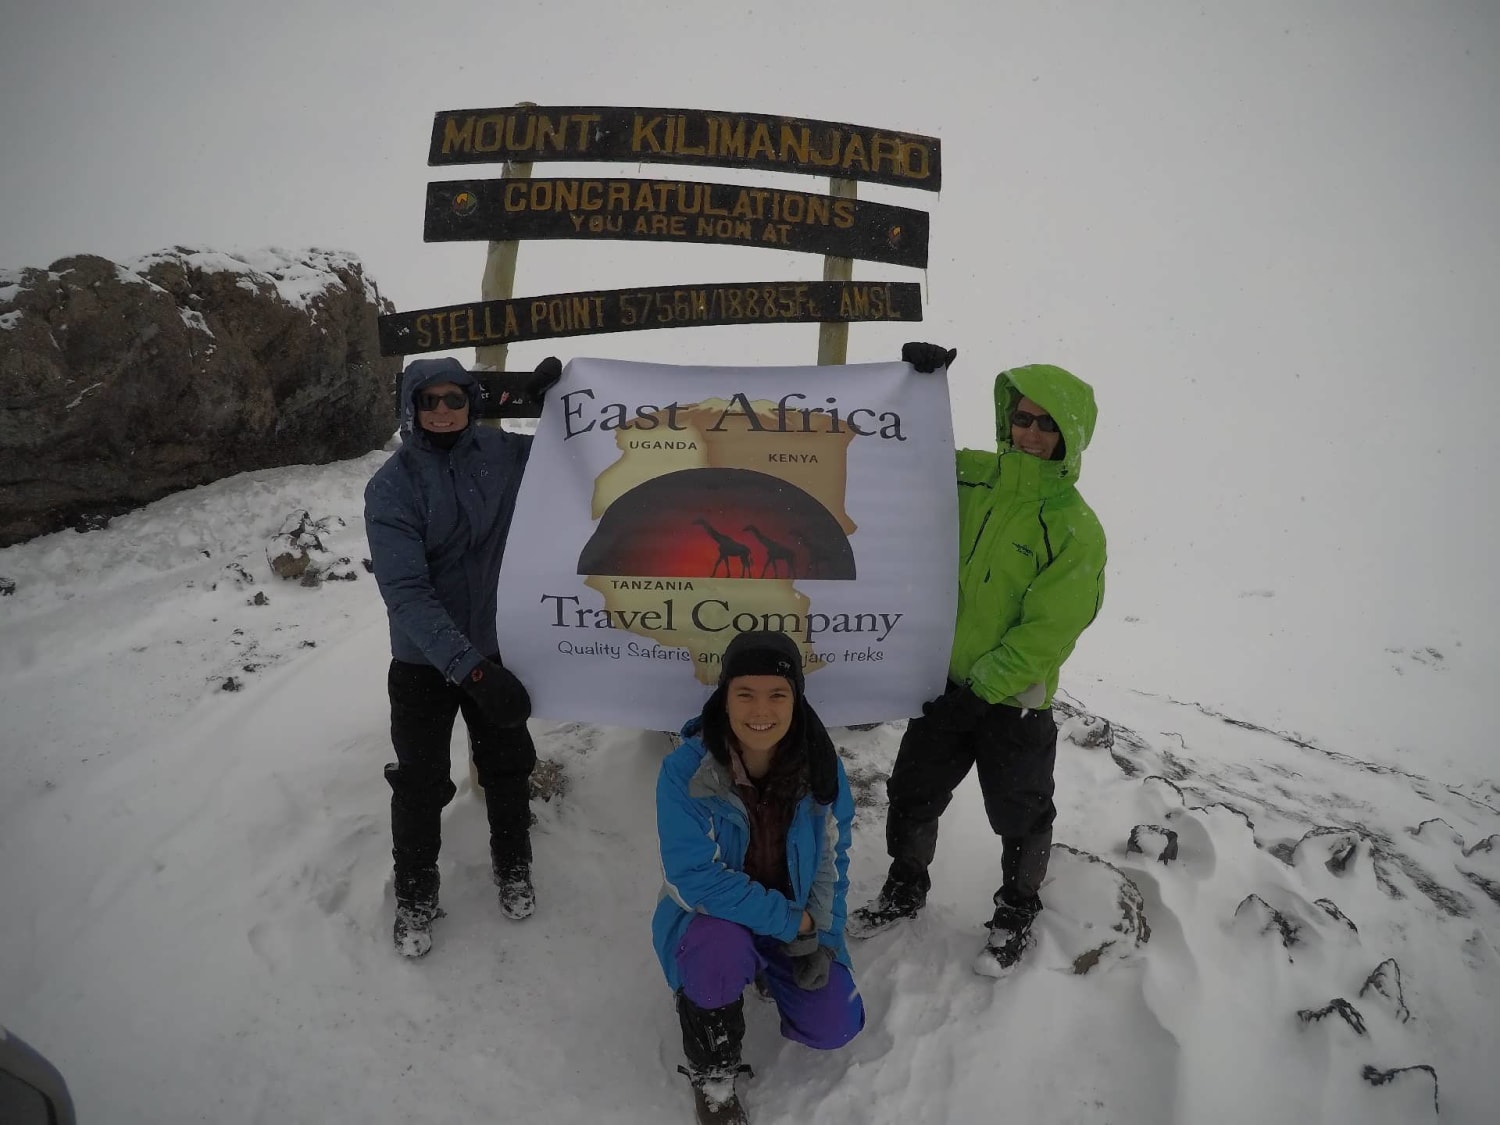 Kilimanjaro Climb Cost - East Africa Travel Company